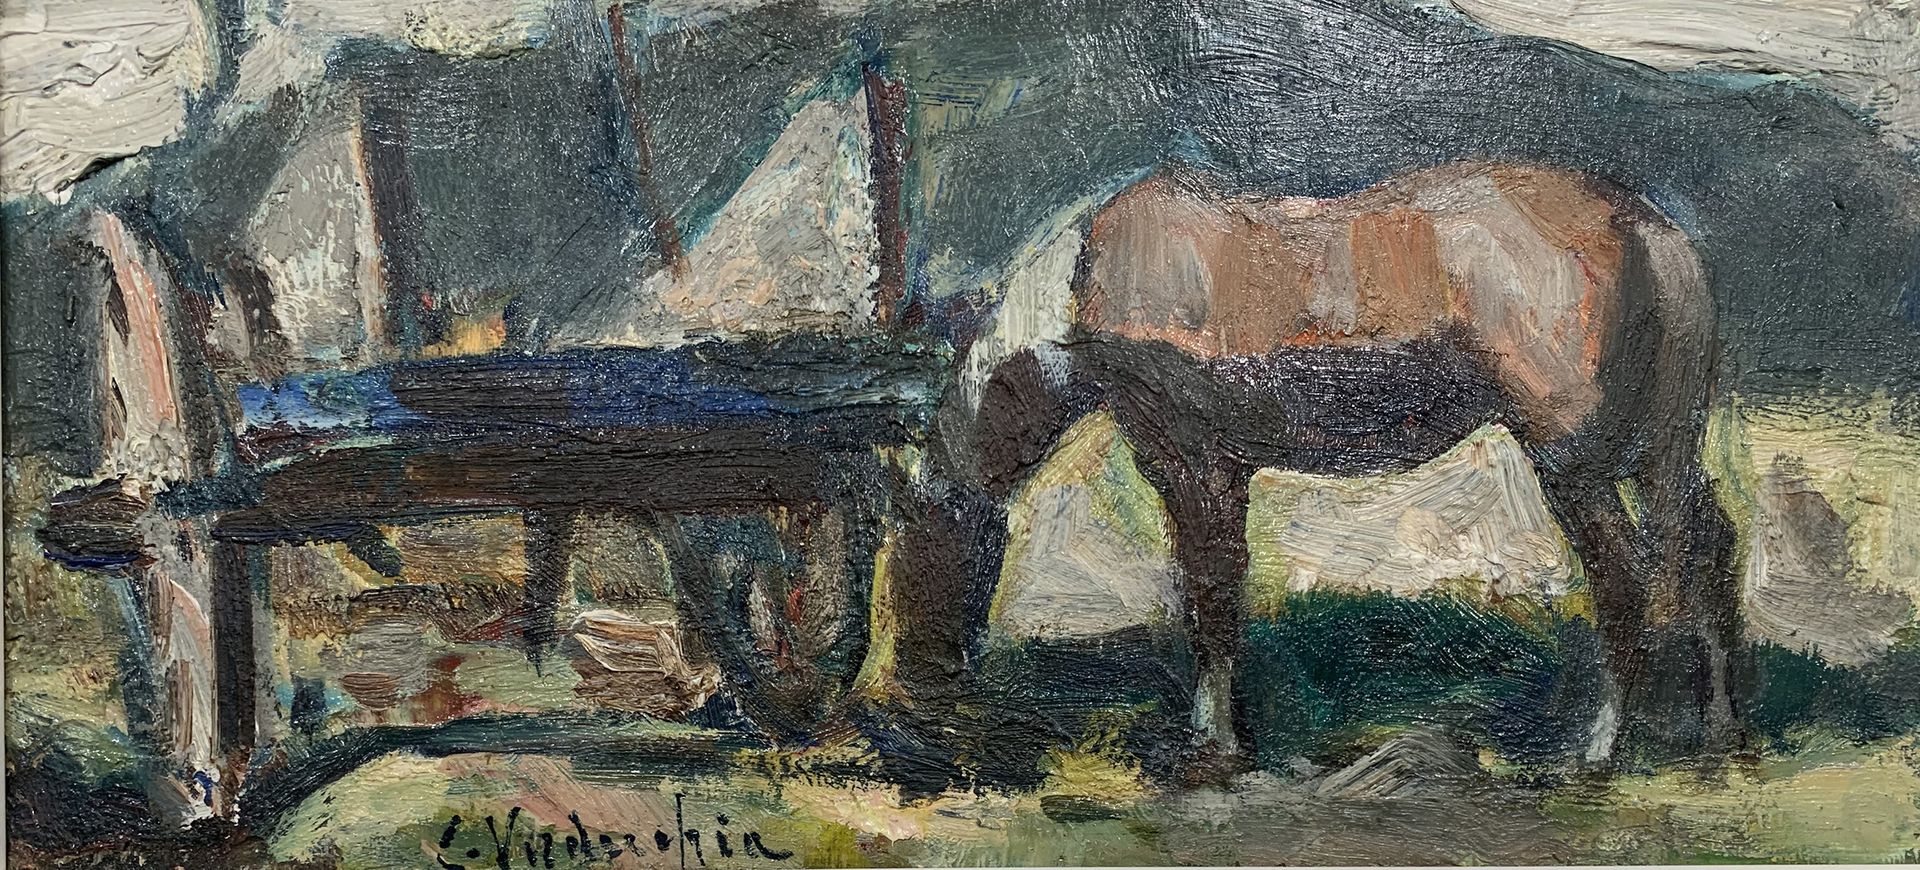 Verdecchia Carlo (Atri, TE 1905 - Napoli 1984) 马和马车
板面油画
签名：左下方
尺寸：cm 15 x 21,5